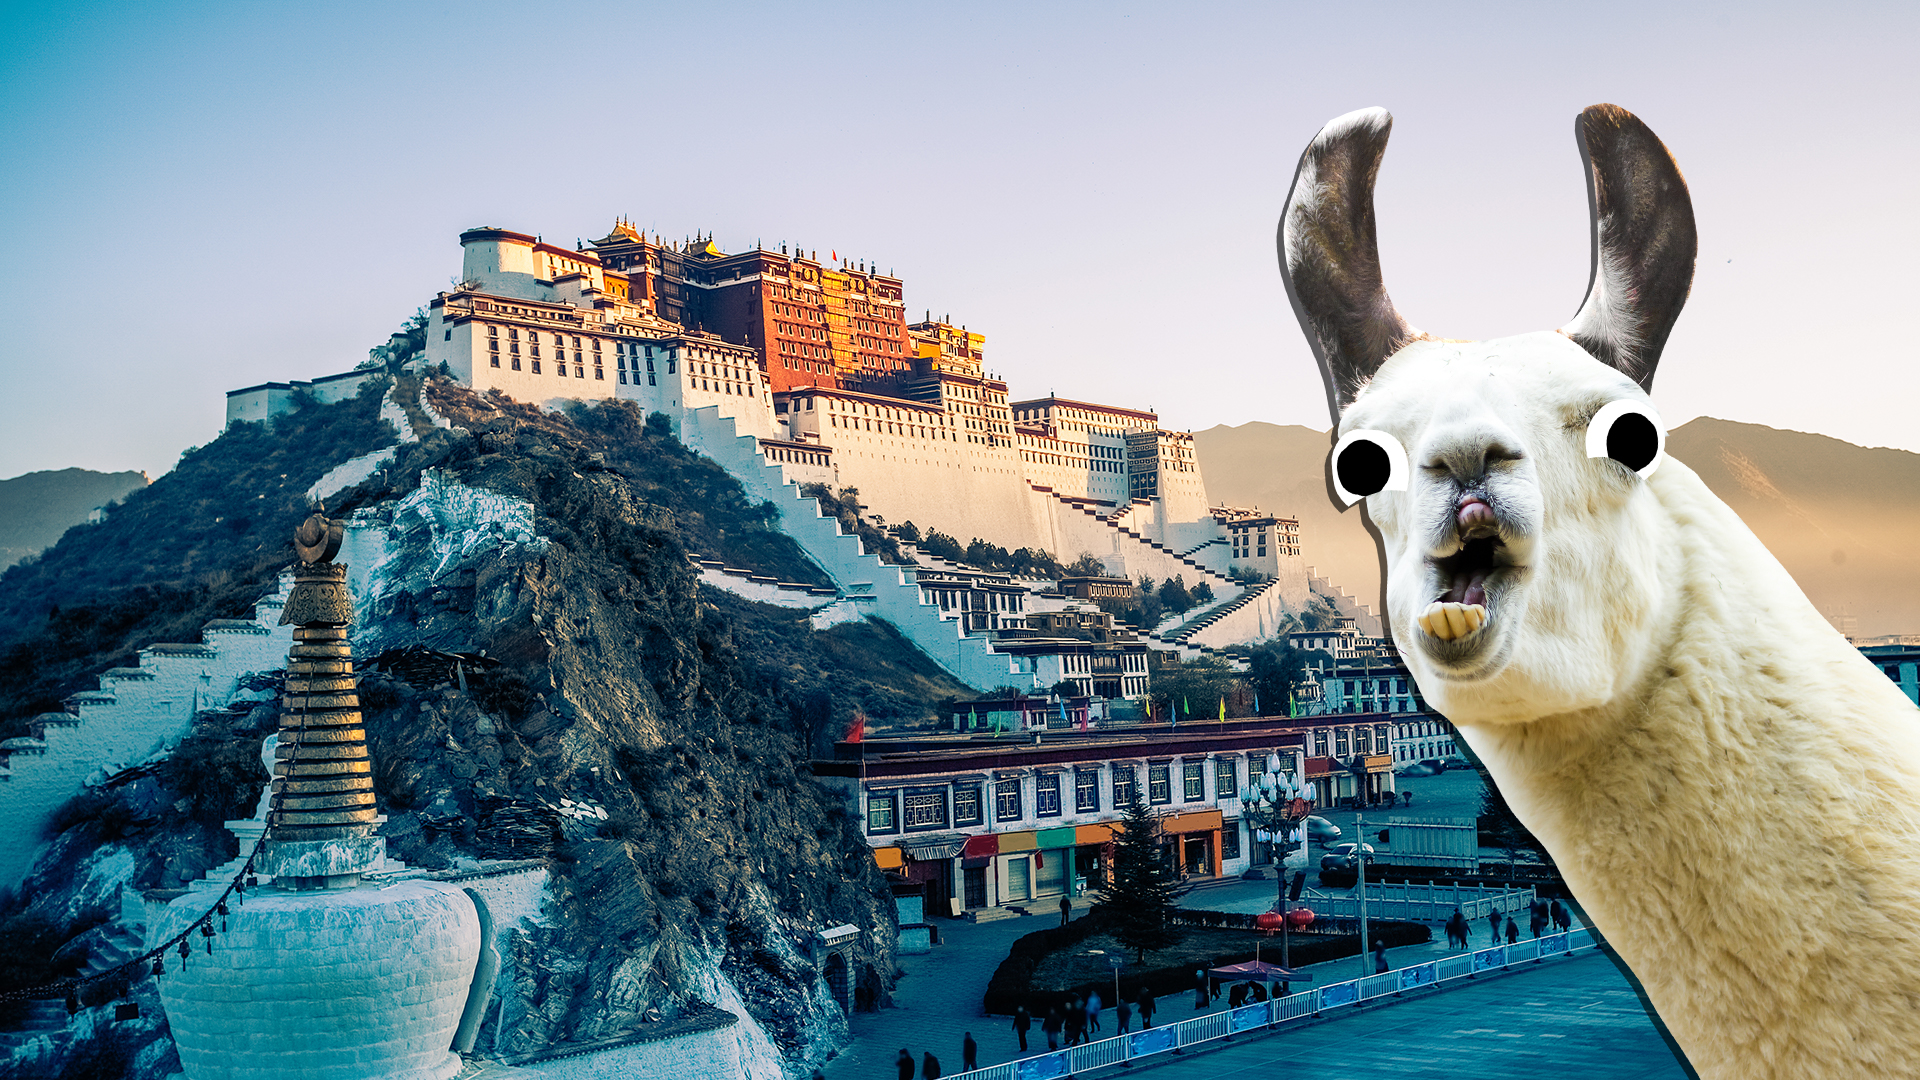 A llama visits the Potala Palace in Tibet